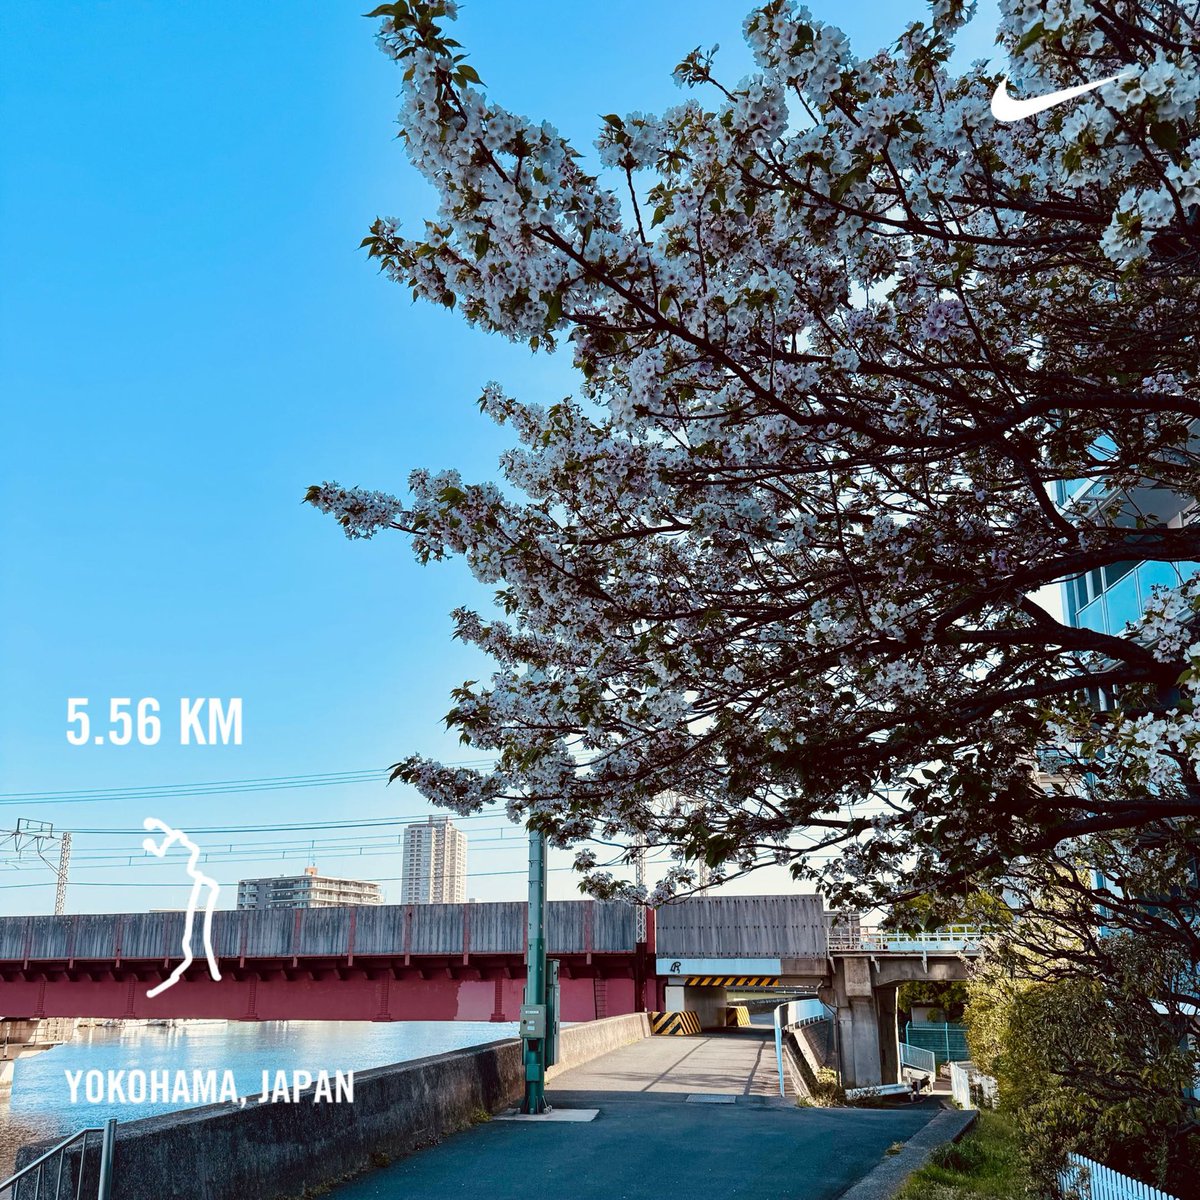 Friday morning run
be patient and calm

 #nikerunclub #run #running #jogging #nikeplus #tsurumi #yokohama #japan #morning #morningrun #🏃‍♂️ #river #riverside #riversiderun #riverrun #shotoniphone #桜 #sakura #cherryblossom #🌸